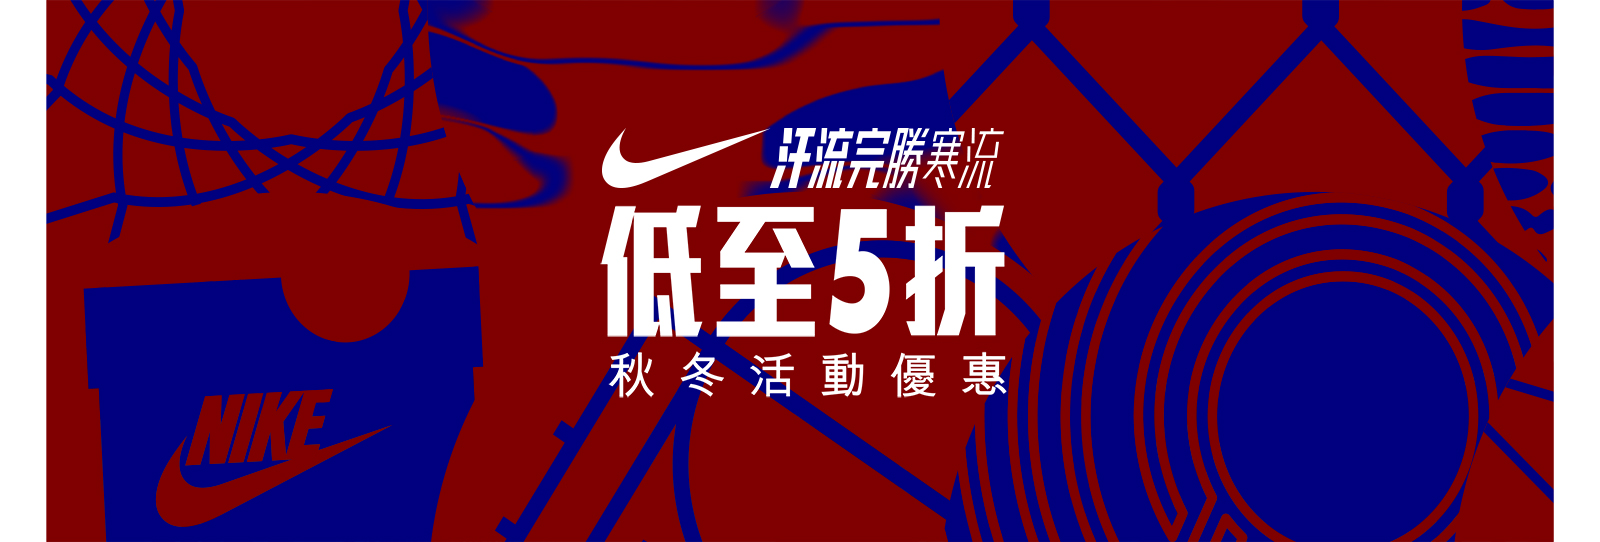 márketing haz básico 最新Nike優惠碼/Nike耐克折扣碼/耐克折價券/夏季促銷Nike優惠券/Nike promo code – Today is  Holiday旅行情報網